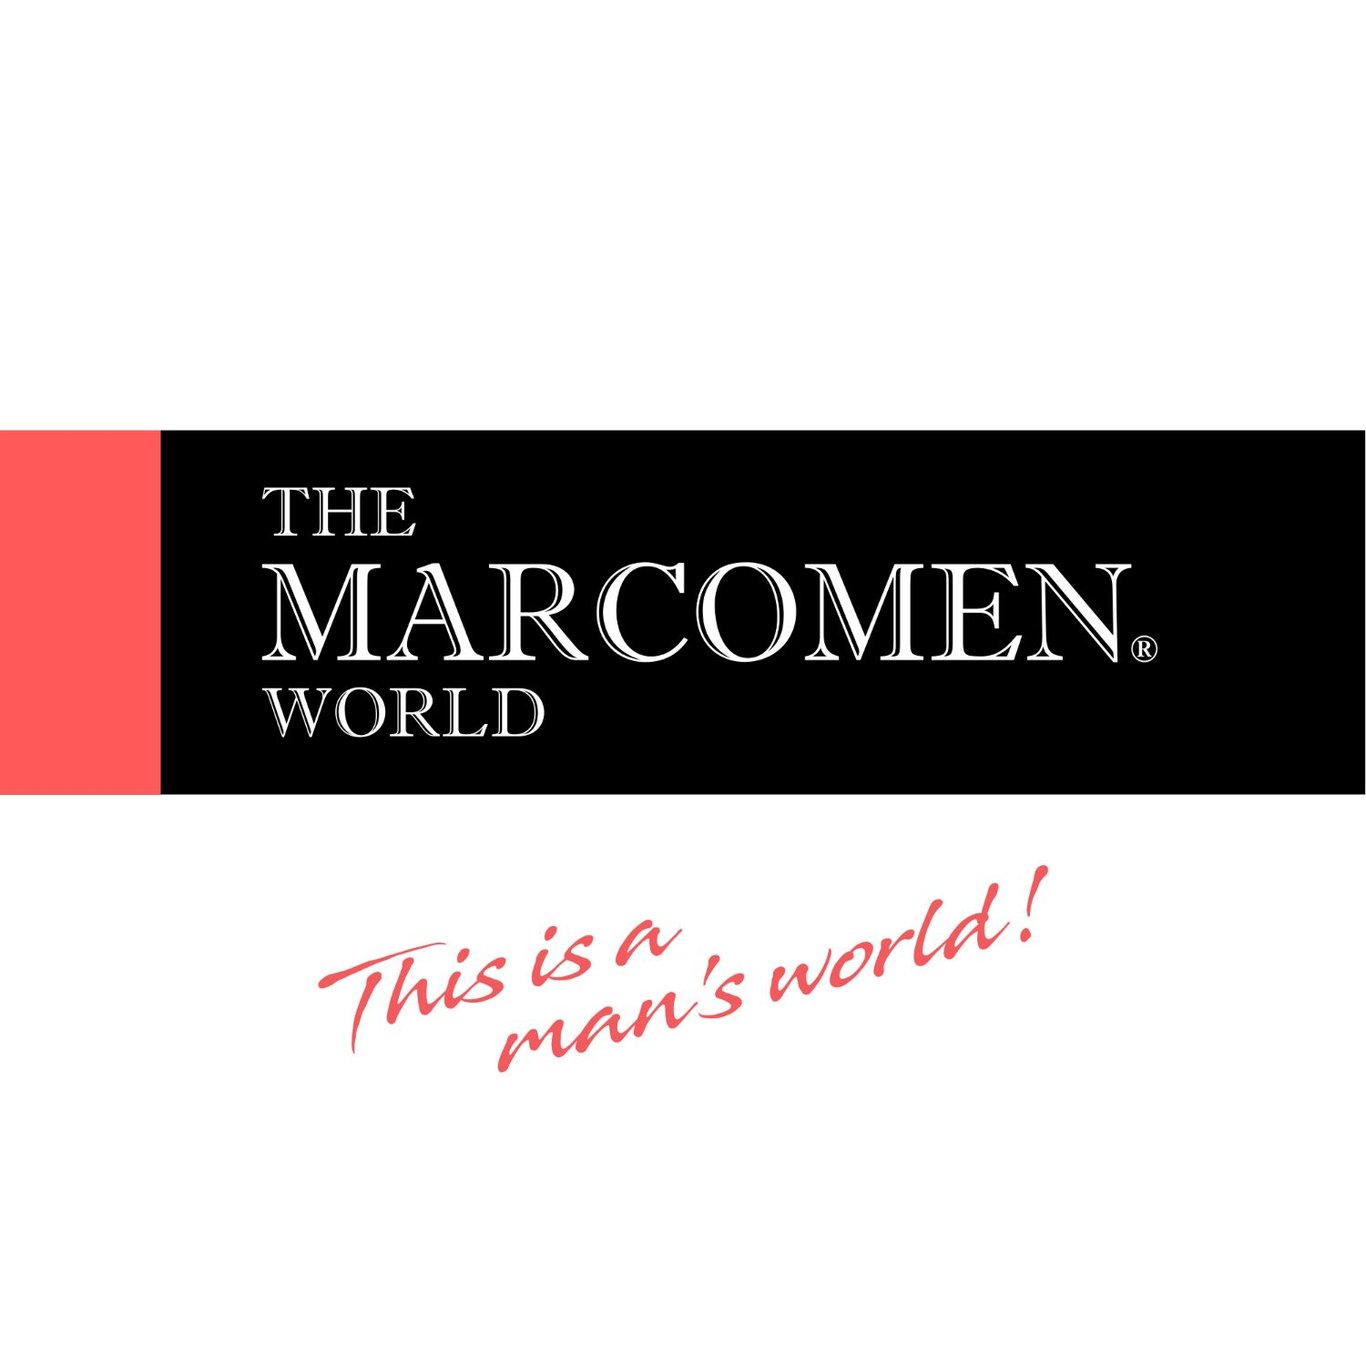 The Marcomen World